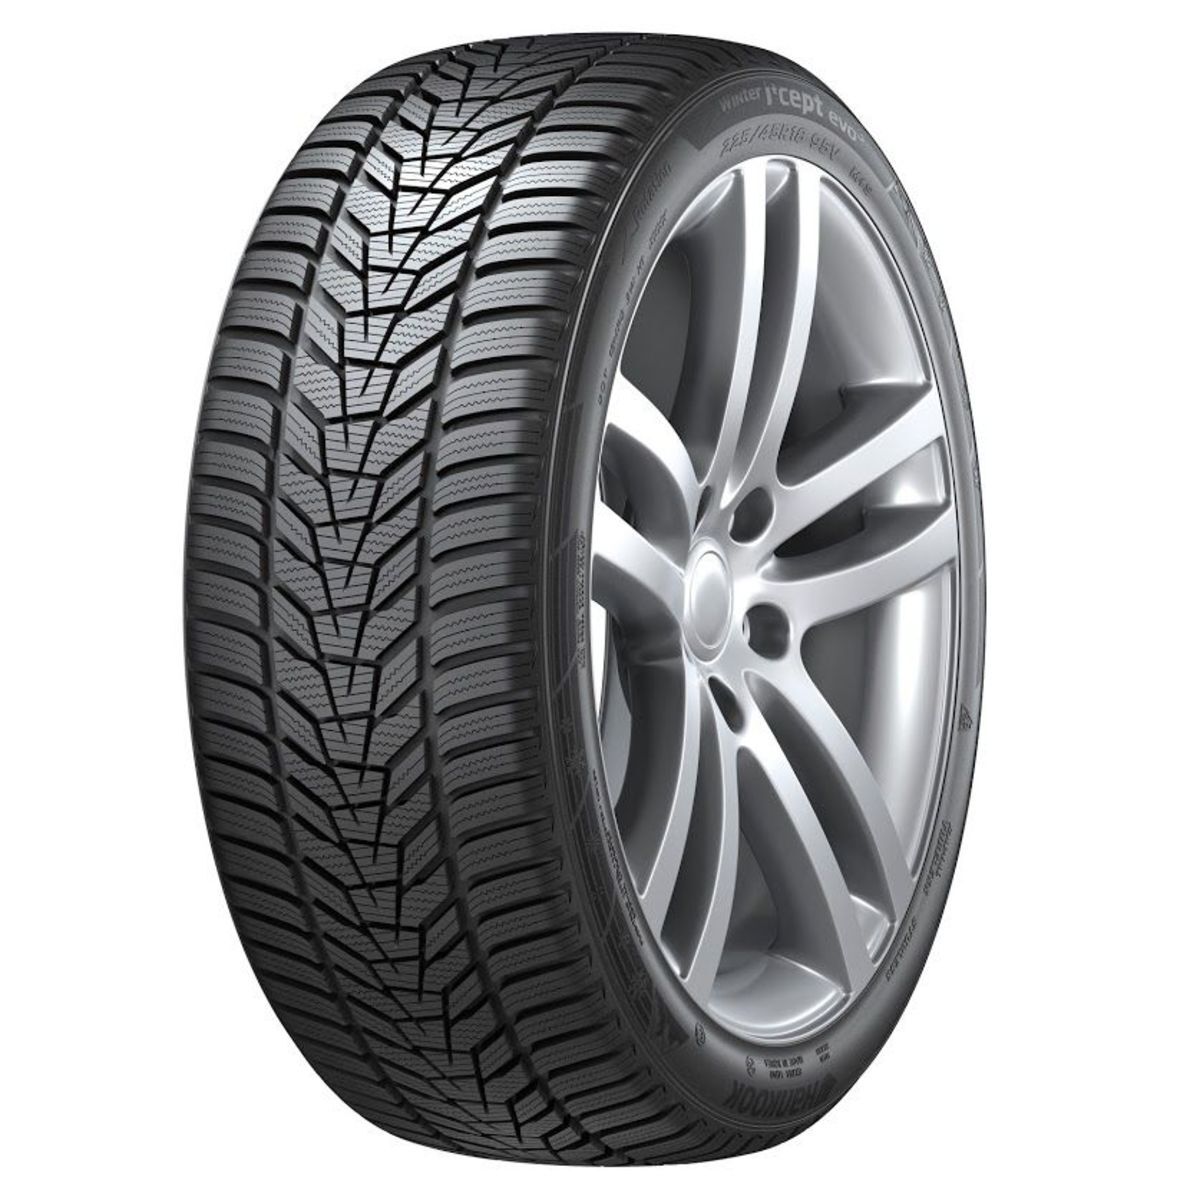 Neumáticos de invierno HANKOOK Winter i*cept evo3 W330 275/35R19 XL 100V